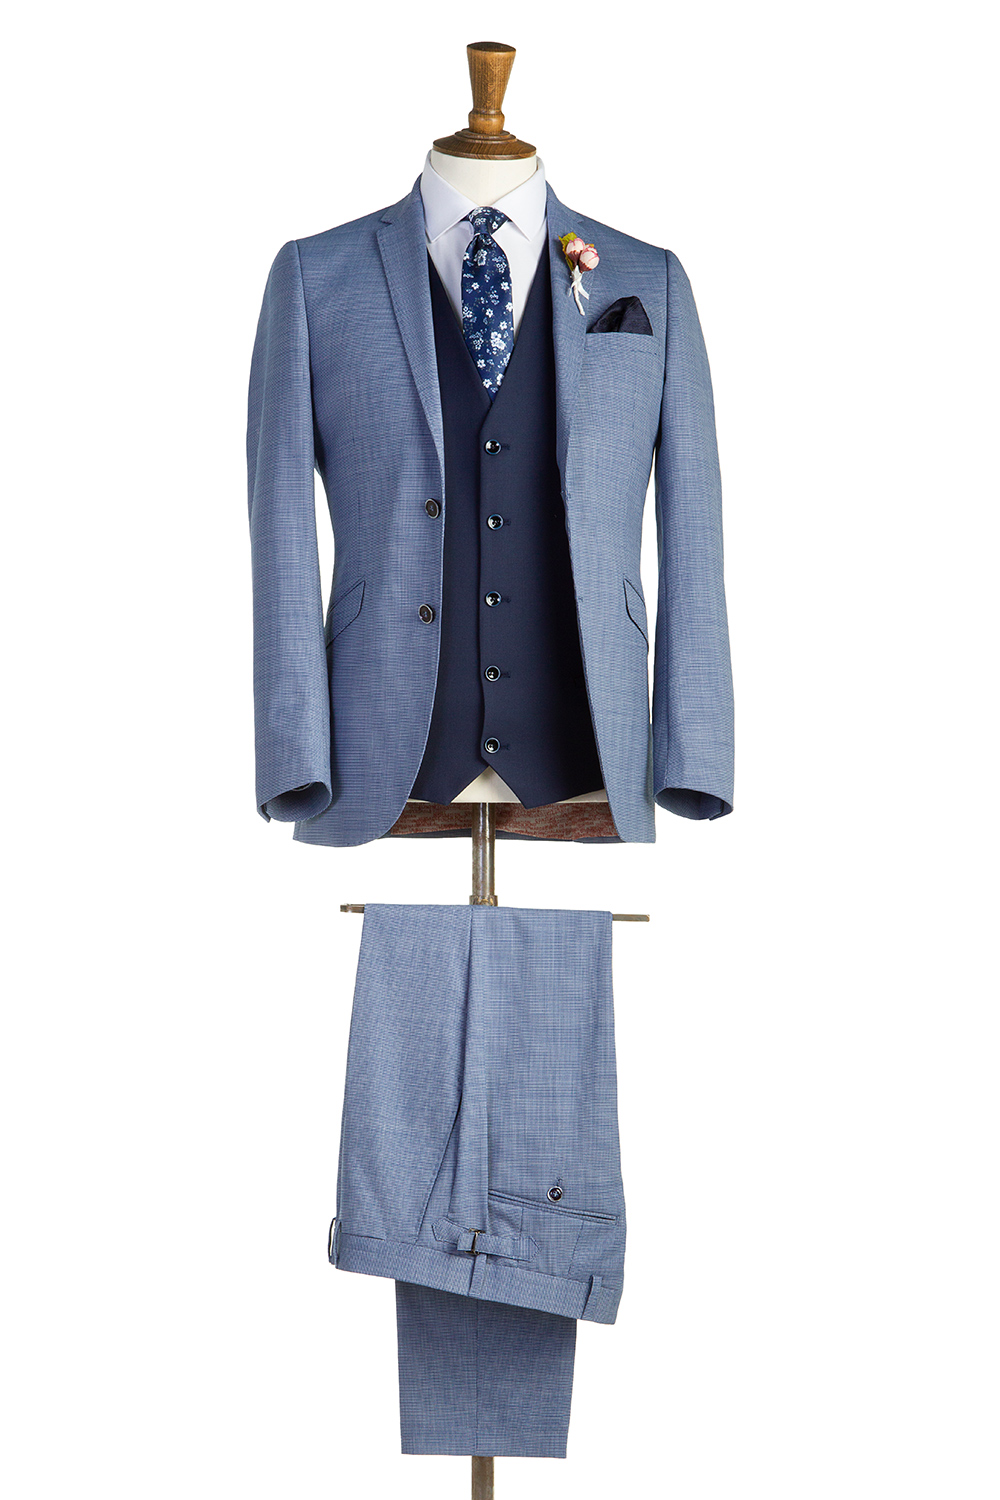 Bradley Light Blue Tweed Suit - Tom Murphy's Formal and Menswear